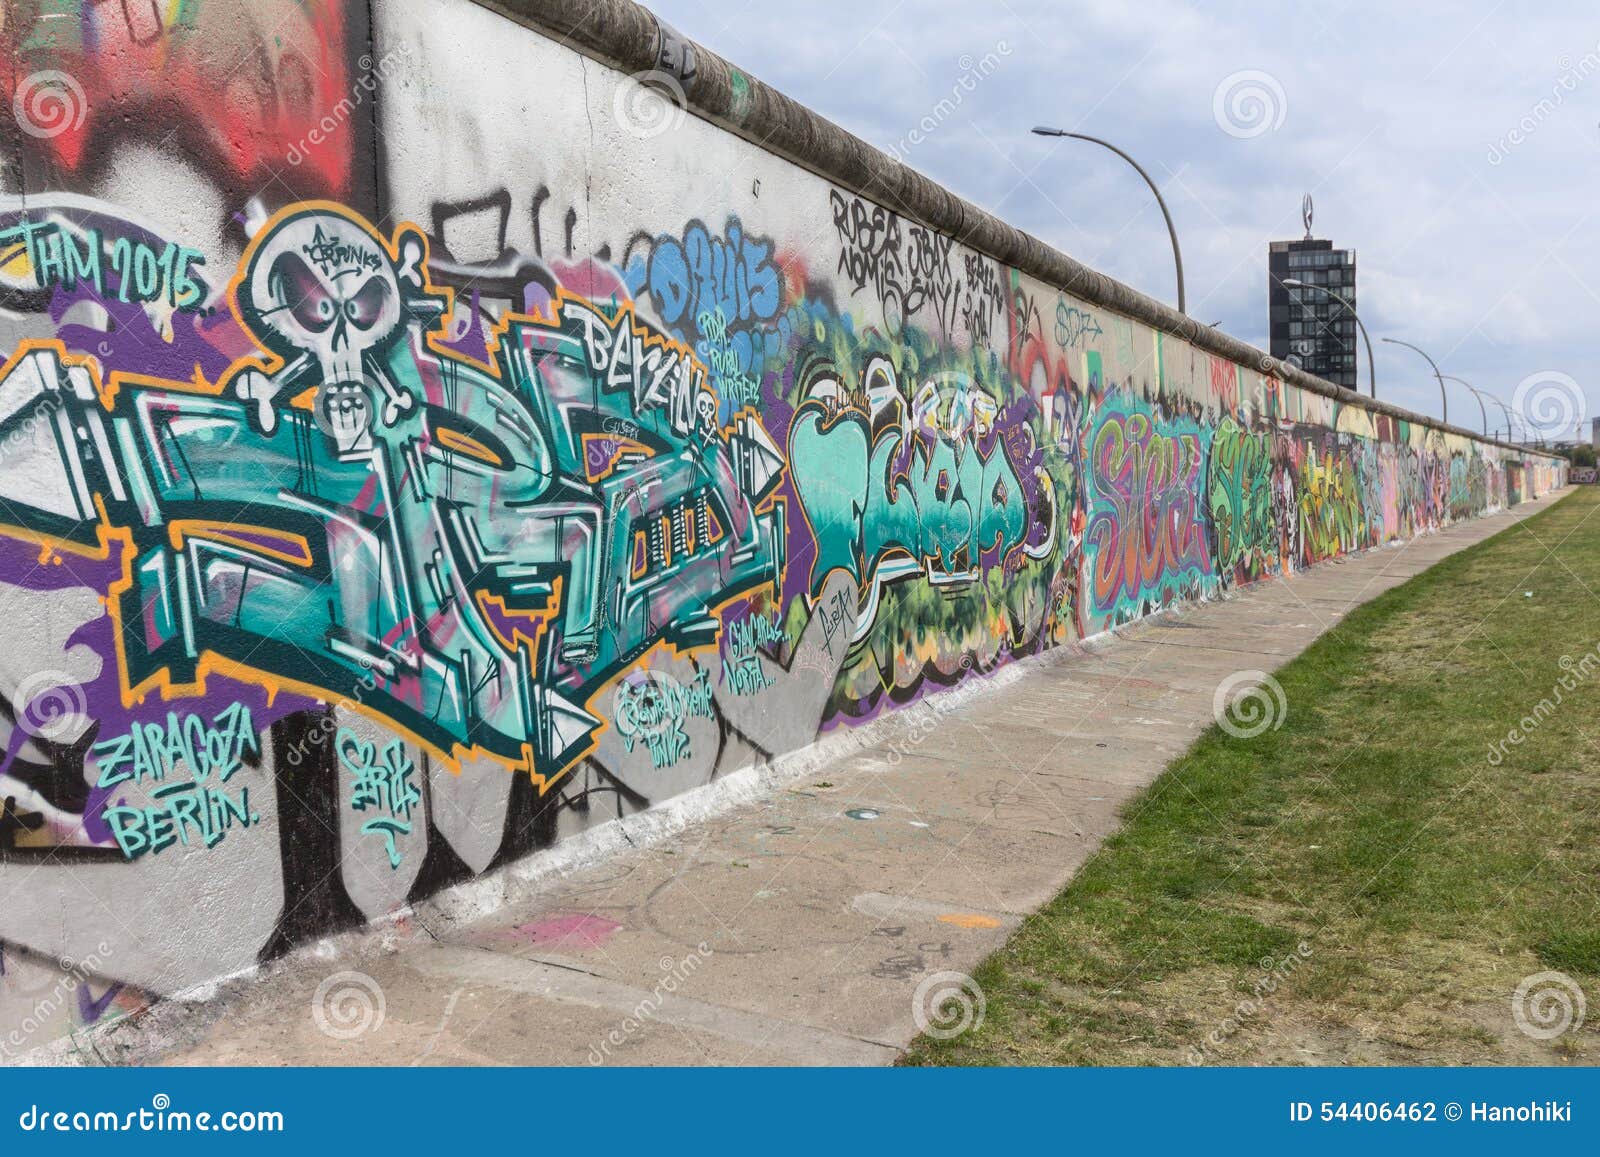 Berlin Wall / East Side Gallery Graffiti Editorial Photography ...